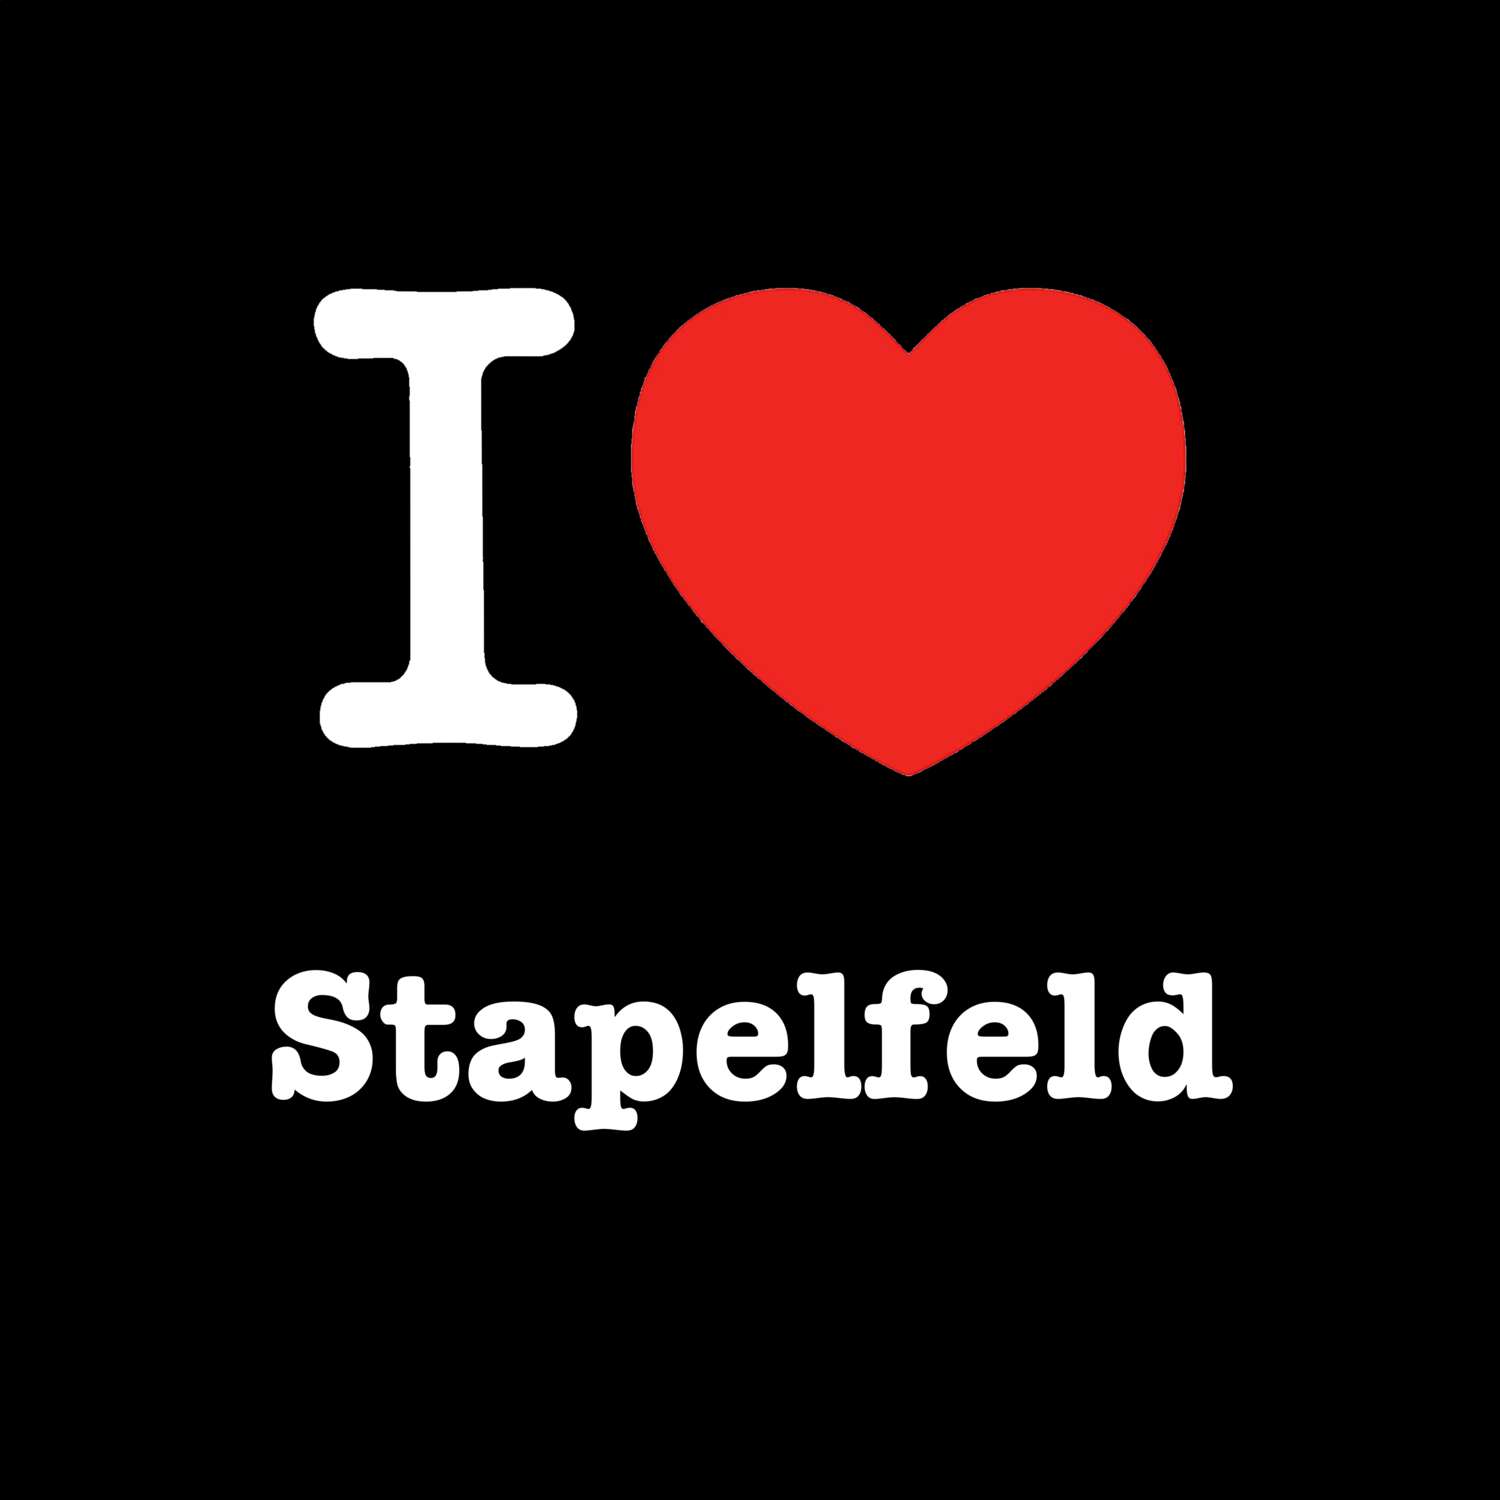 Stapelfeld T-Shirt »I love«